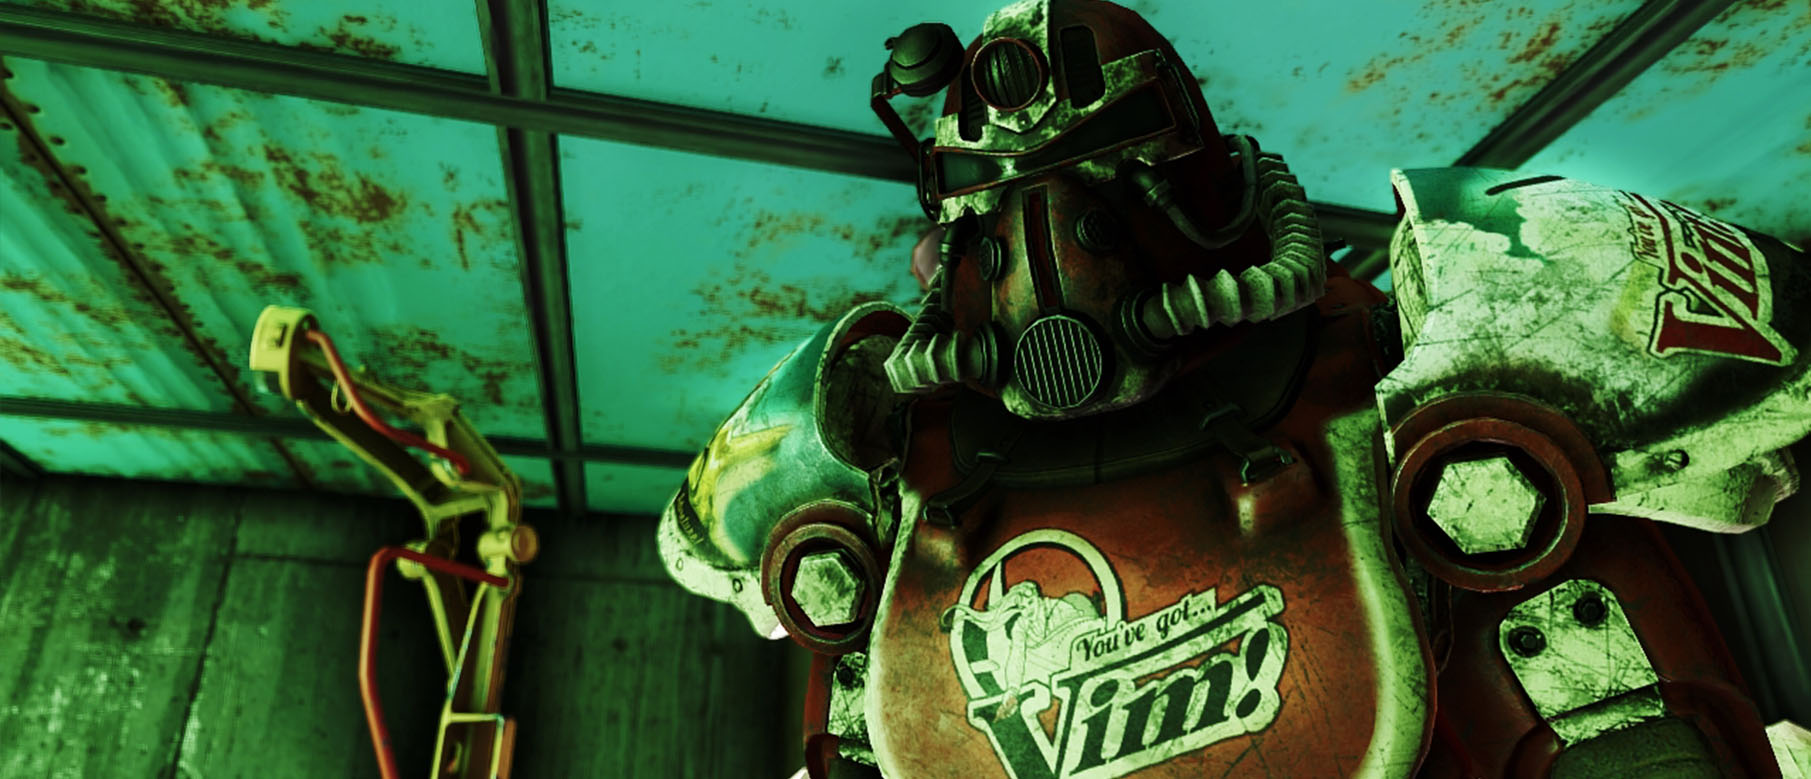 Fallout 4 far harbor болото кранберри айленда фото 87